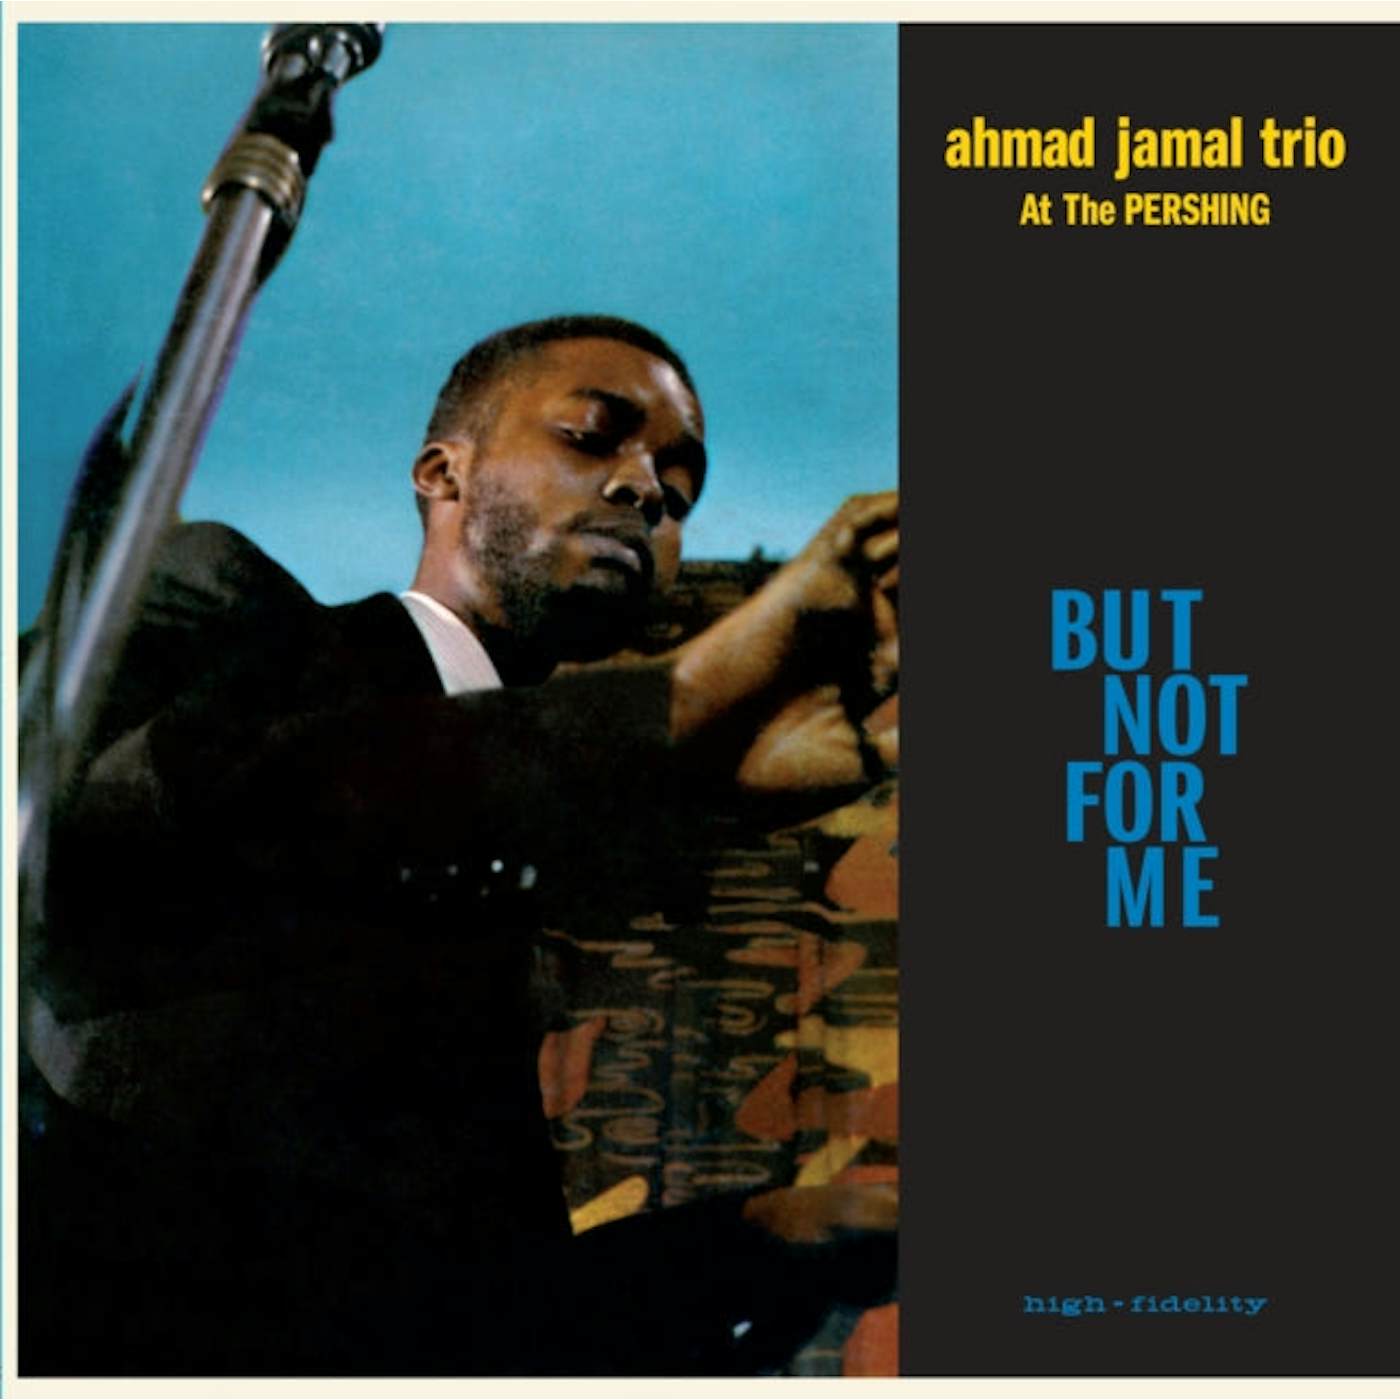 Ahmad Jamal Trio LP Vinyl Record - Live At The Pershing Lounge 19 58 - But Not For Me (+2 Bonus Tracks) (Limited Blue Vinyl)